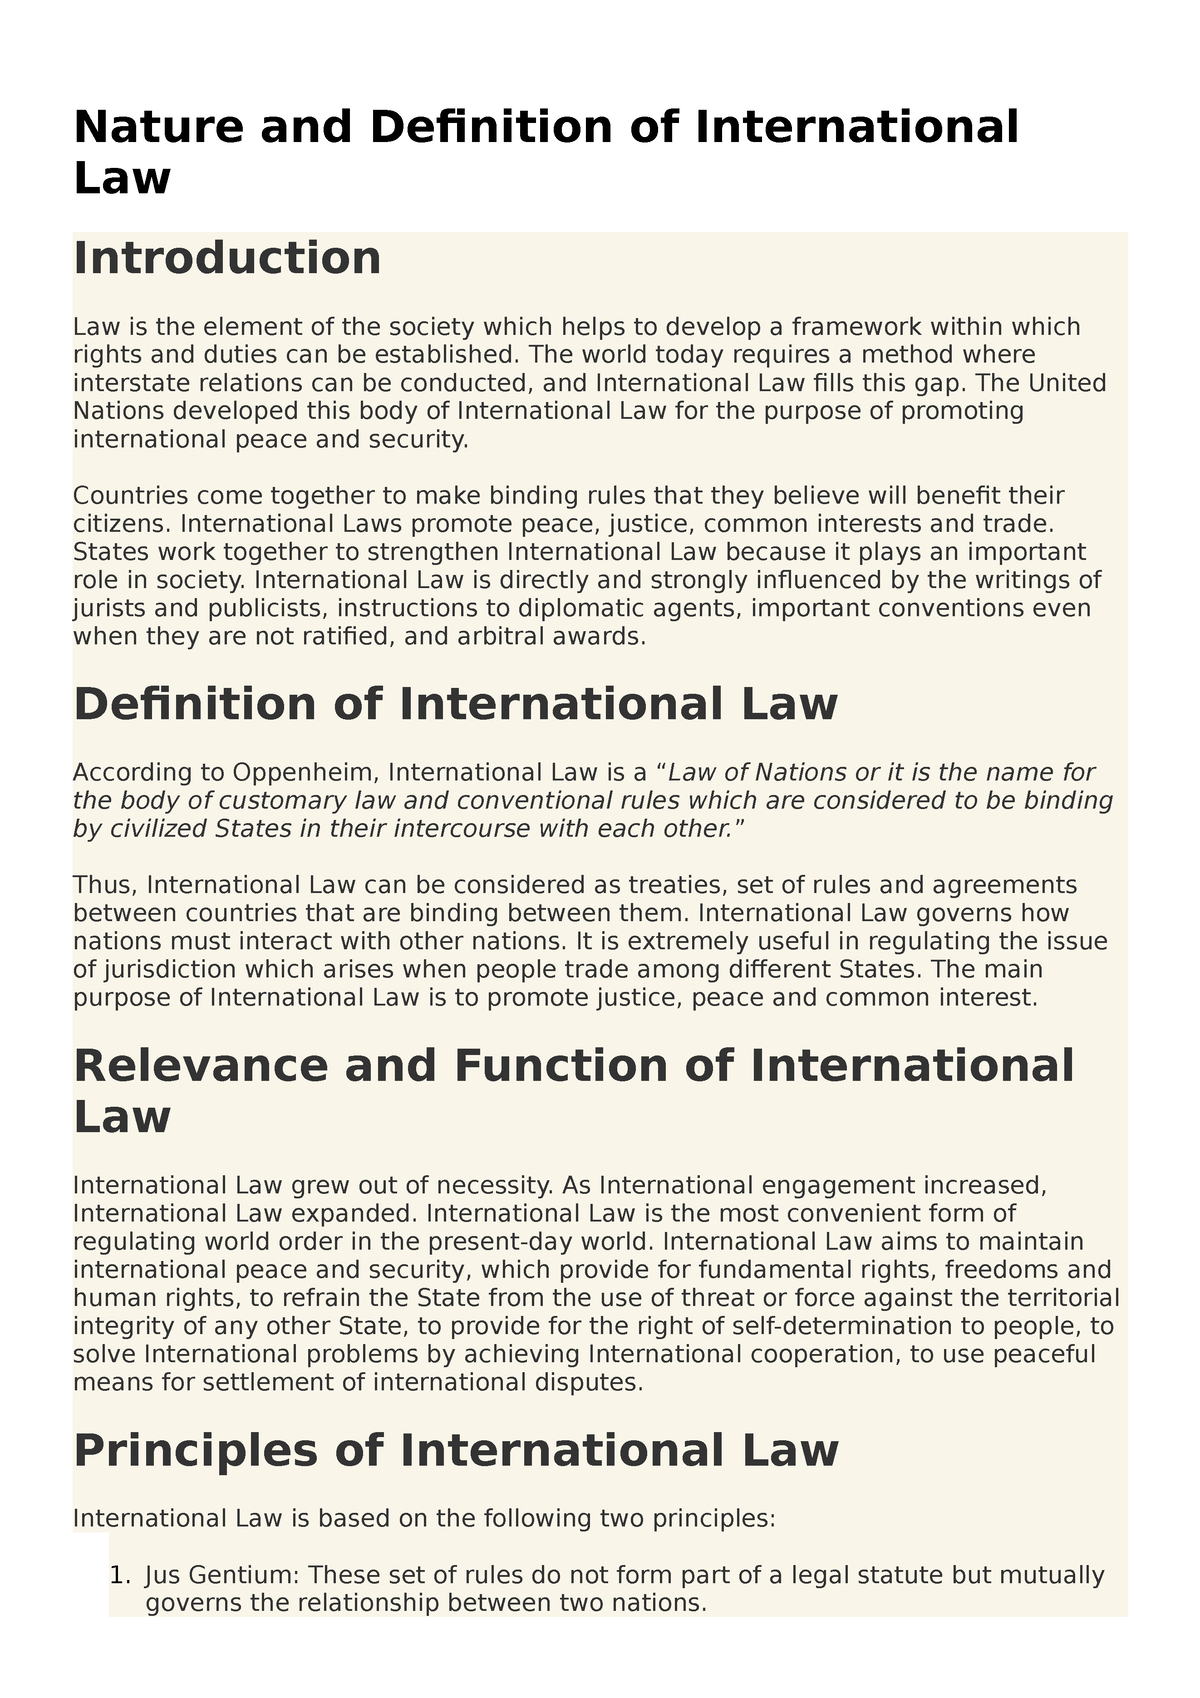 sources of international law uk essays